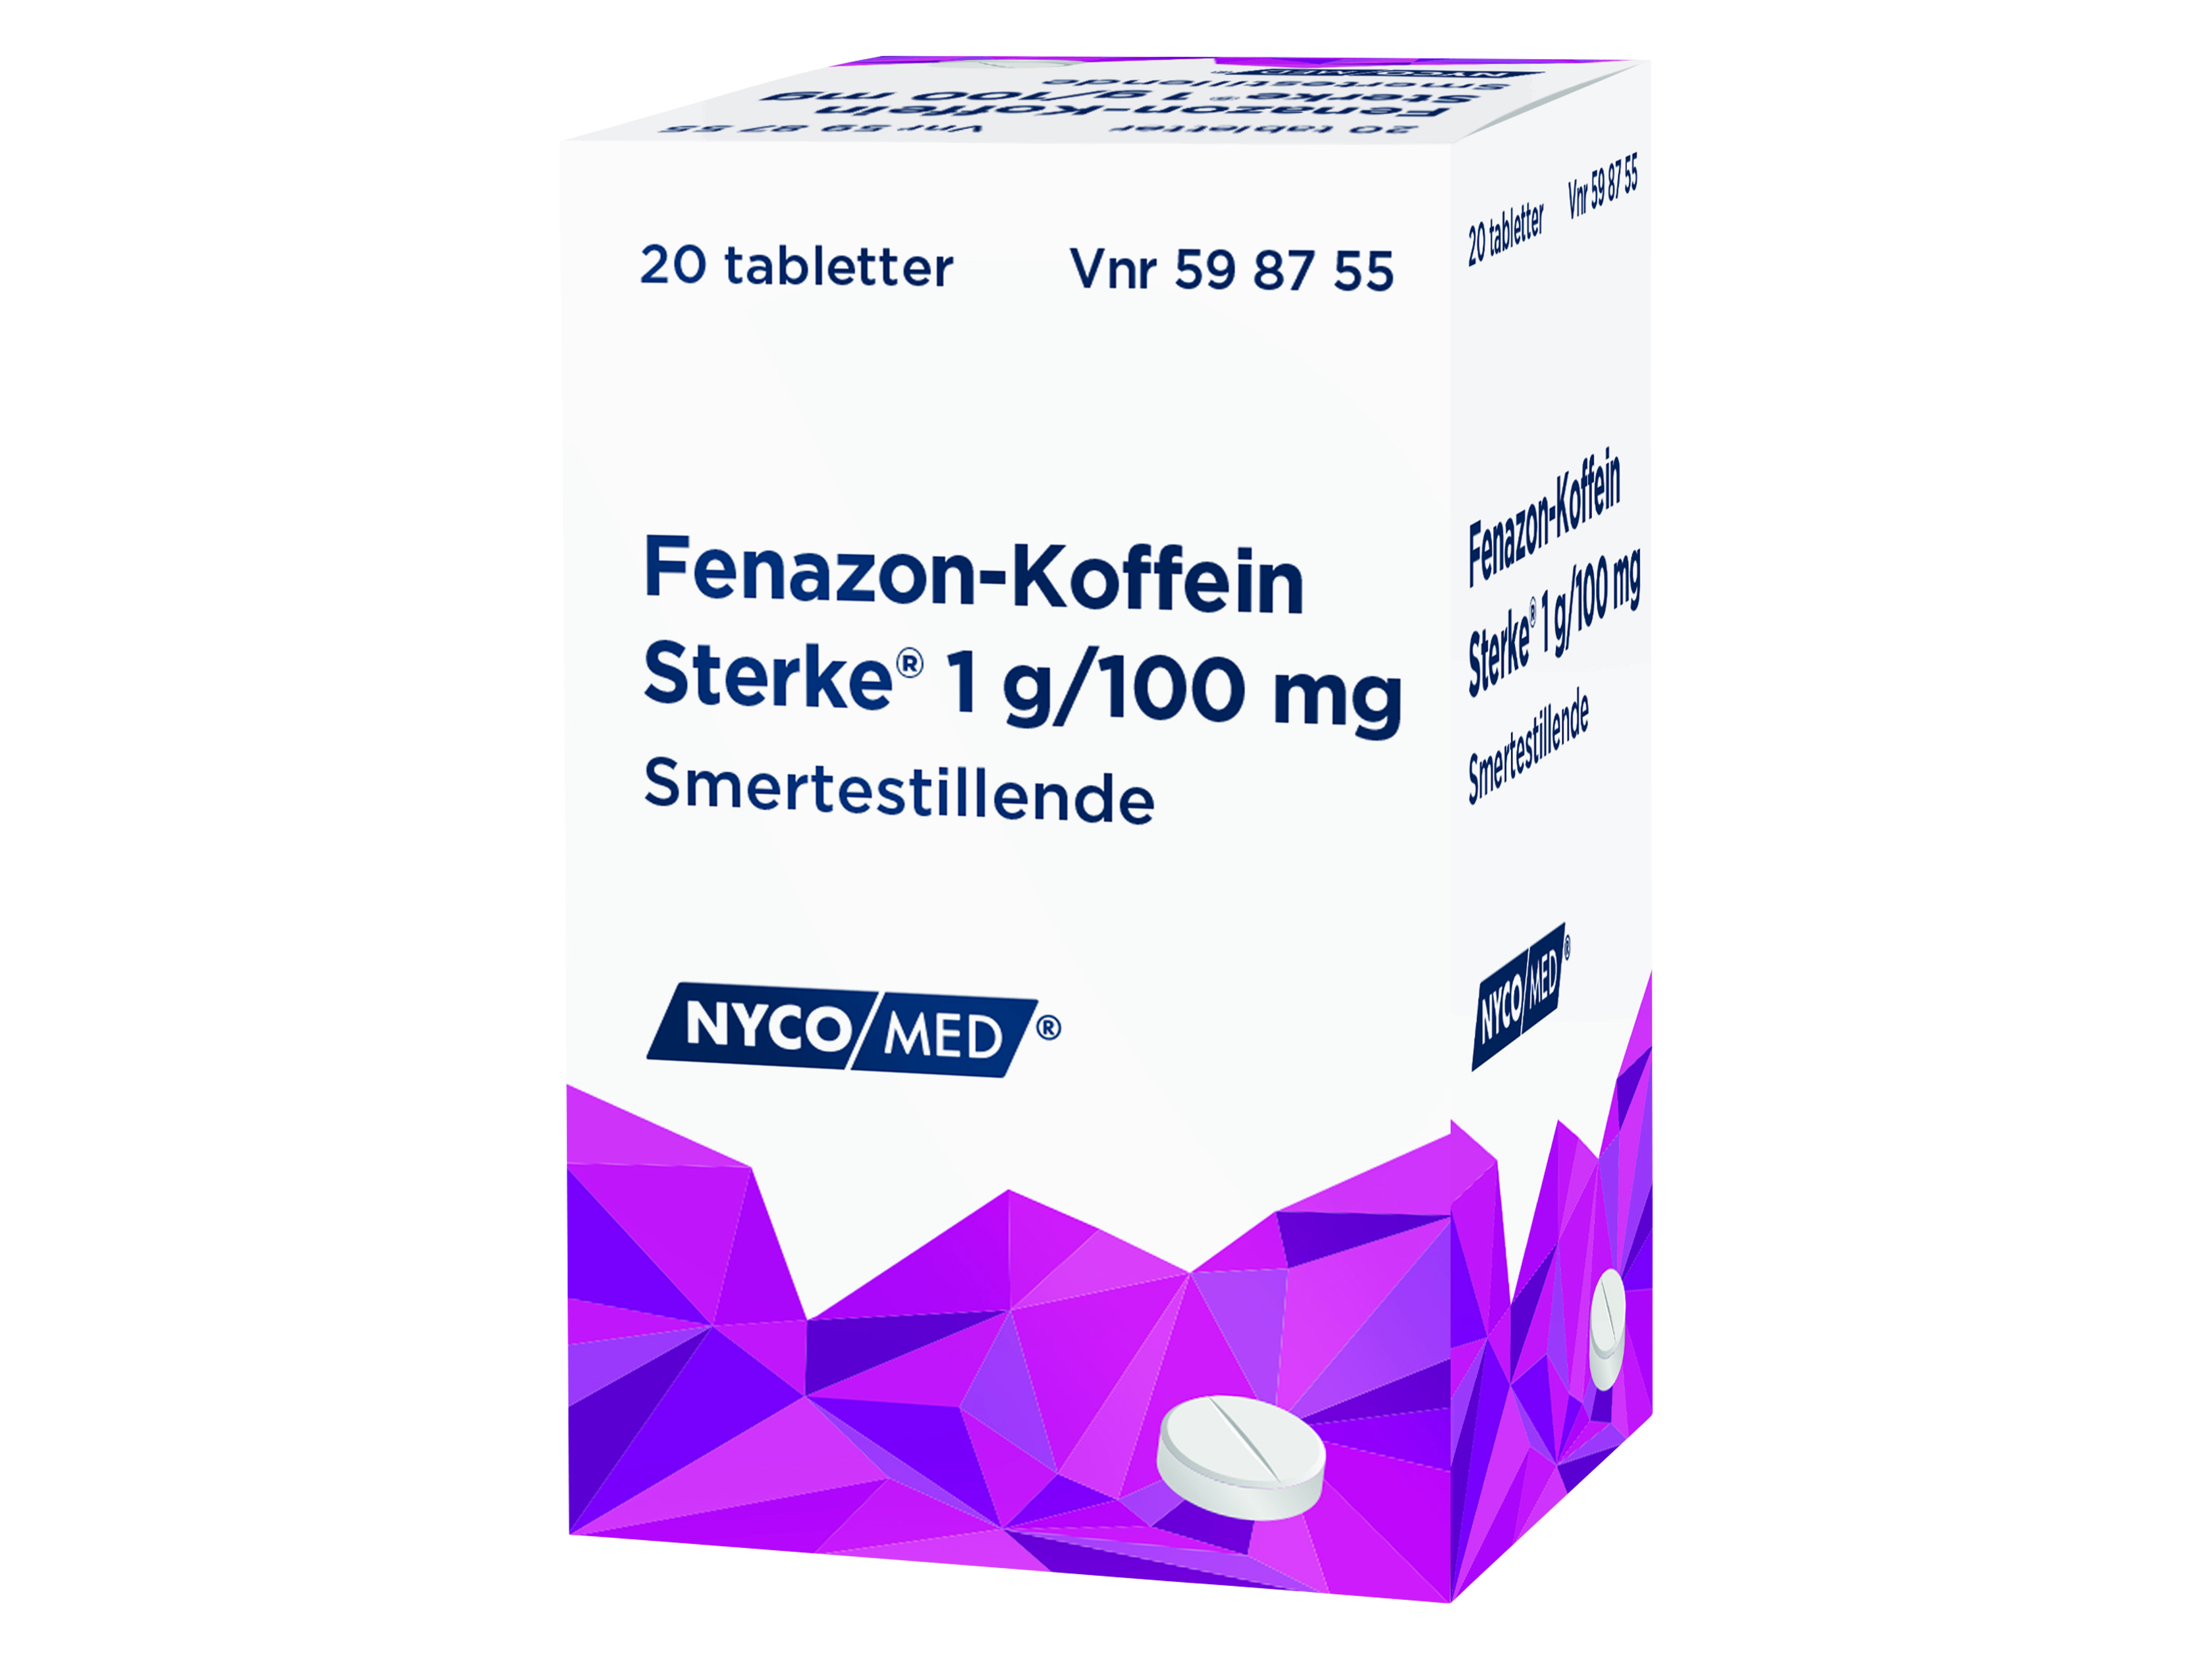 Fenazon-Koffein Sterke tabletter, 20 stk. i boks